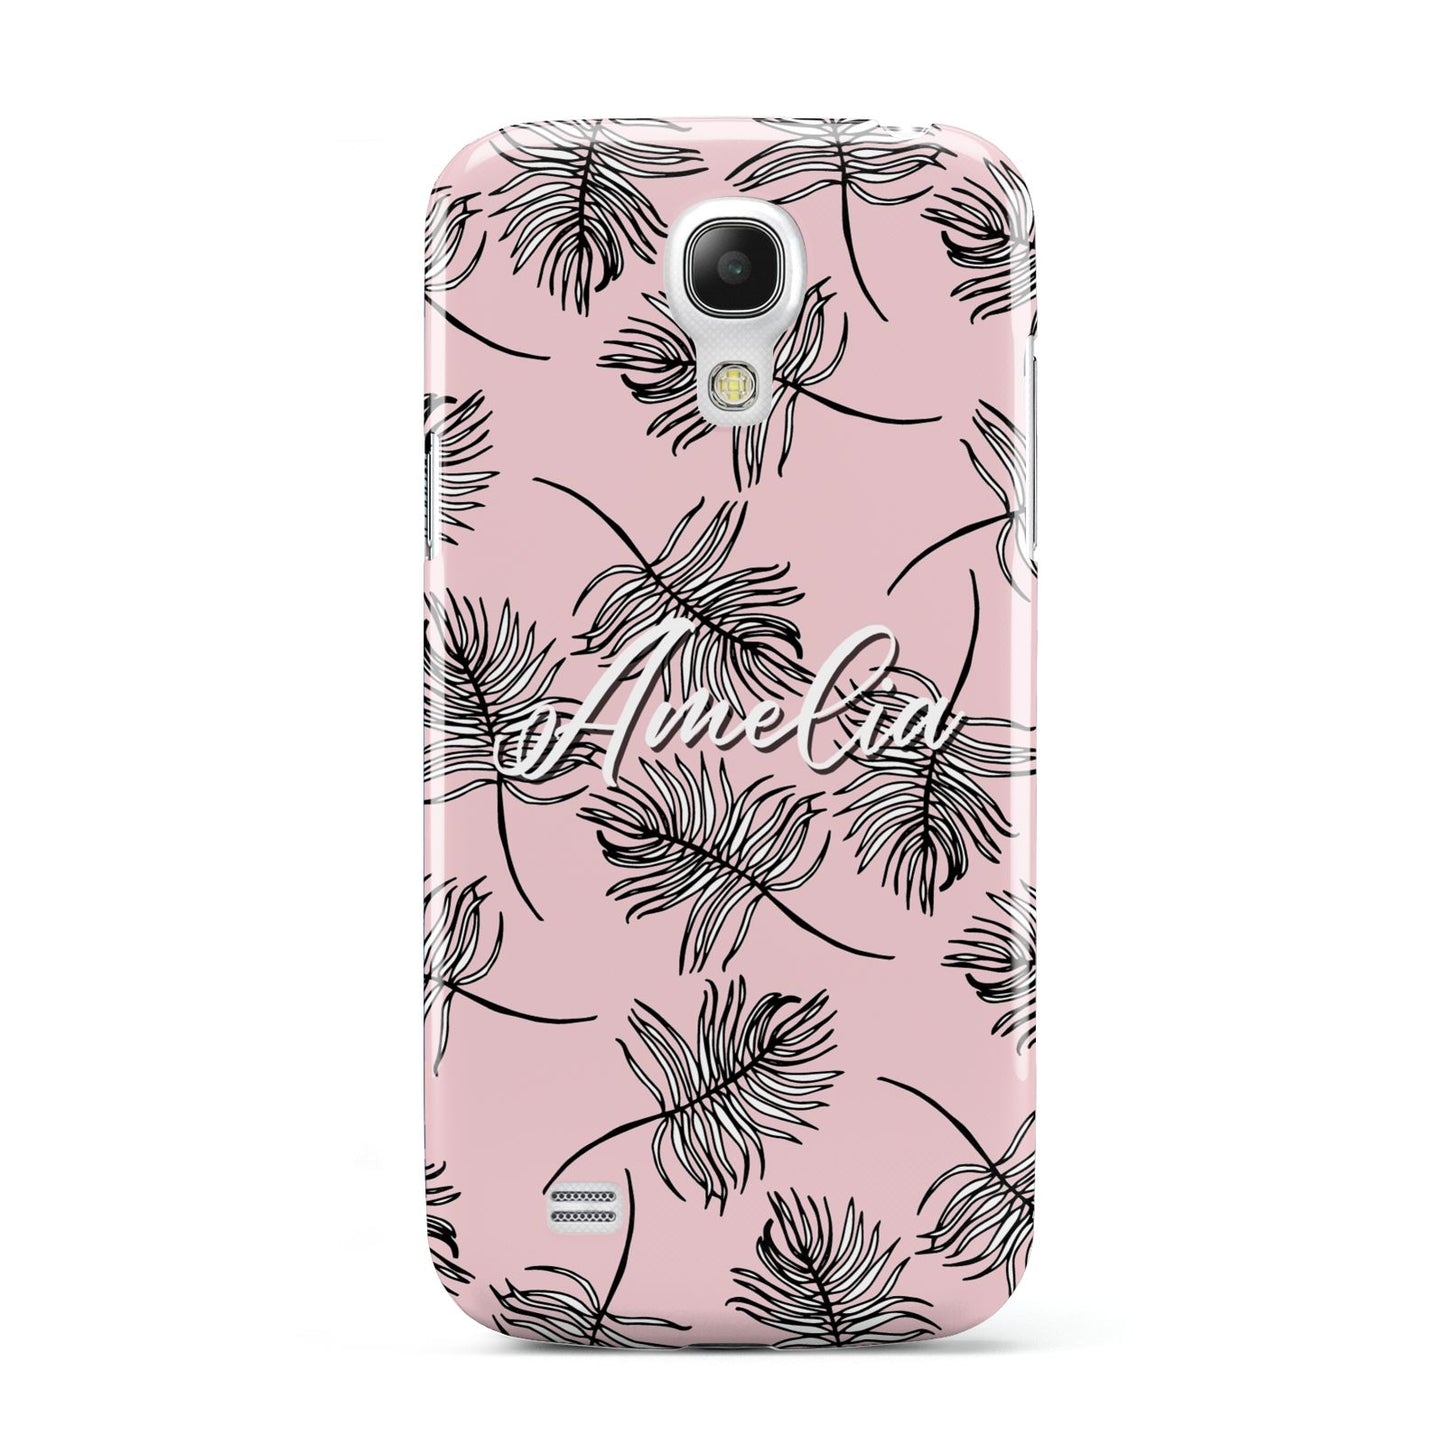 Personalised Pink Monochrome Tropical Leaf Samsung Galaxy S4 Mini Case